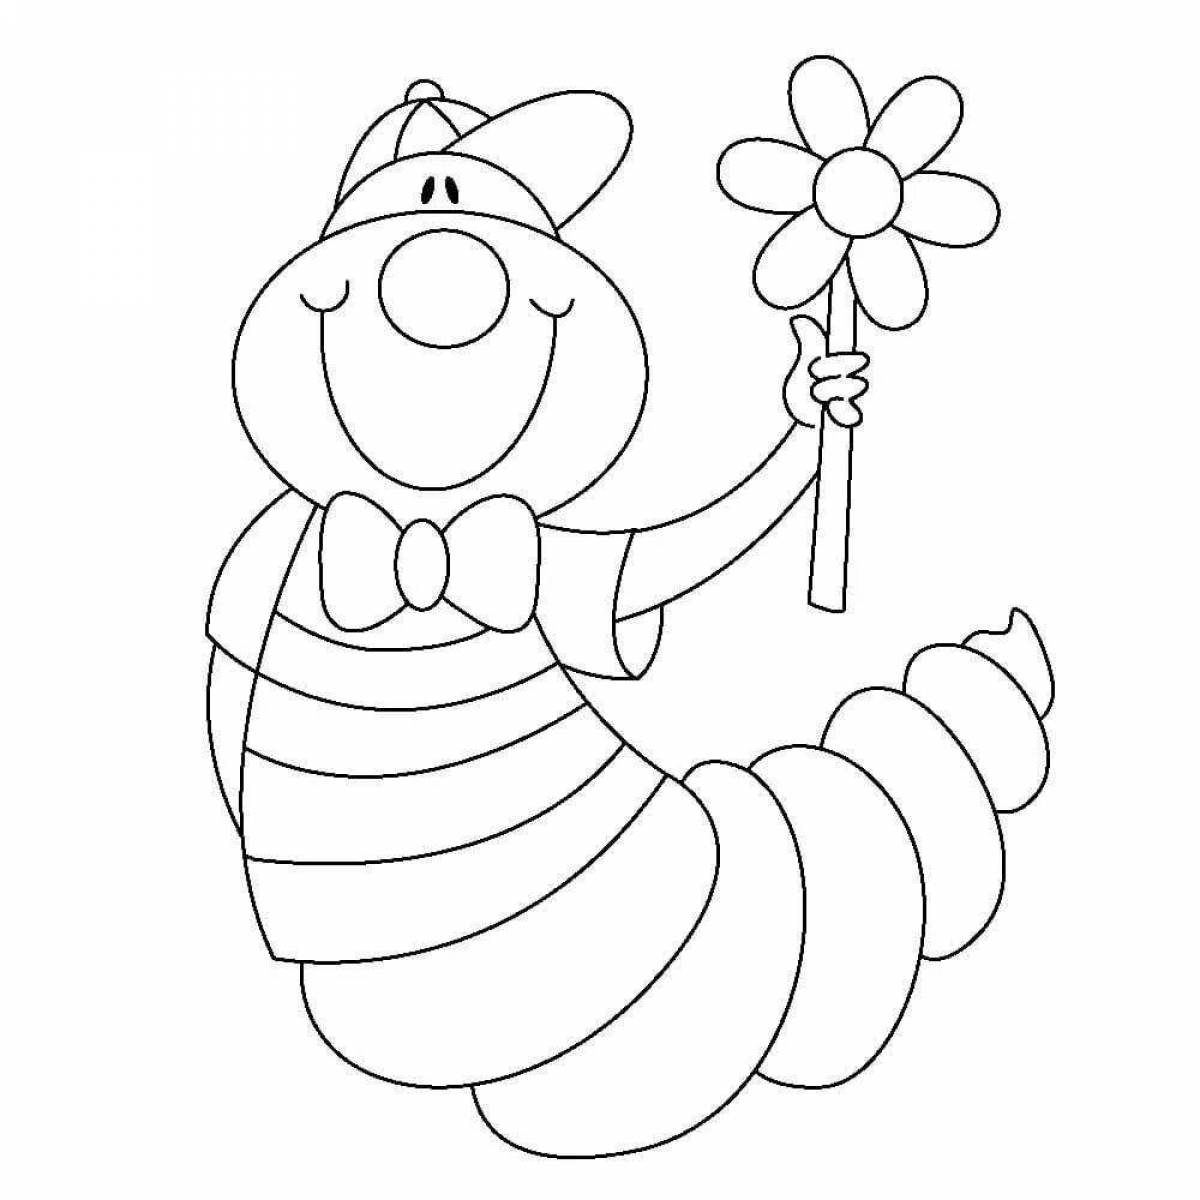 Cute caterpillar coloring book for beginners